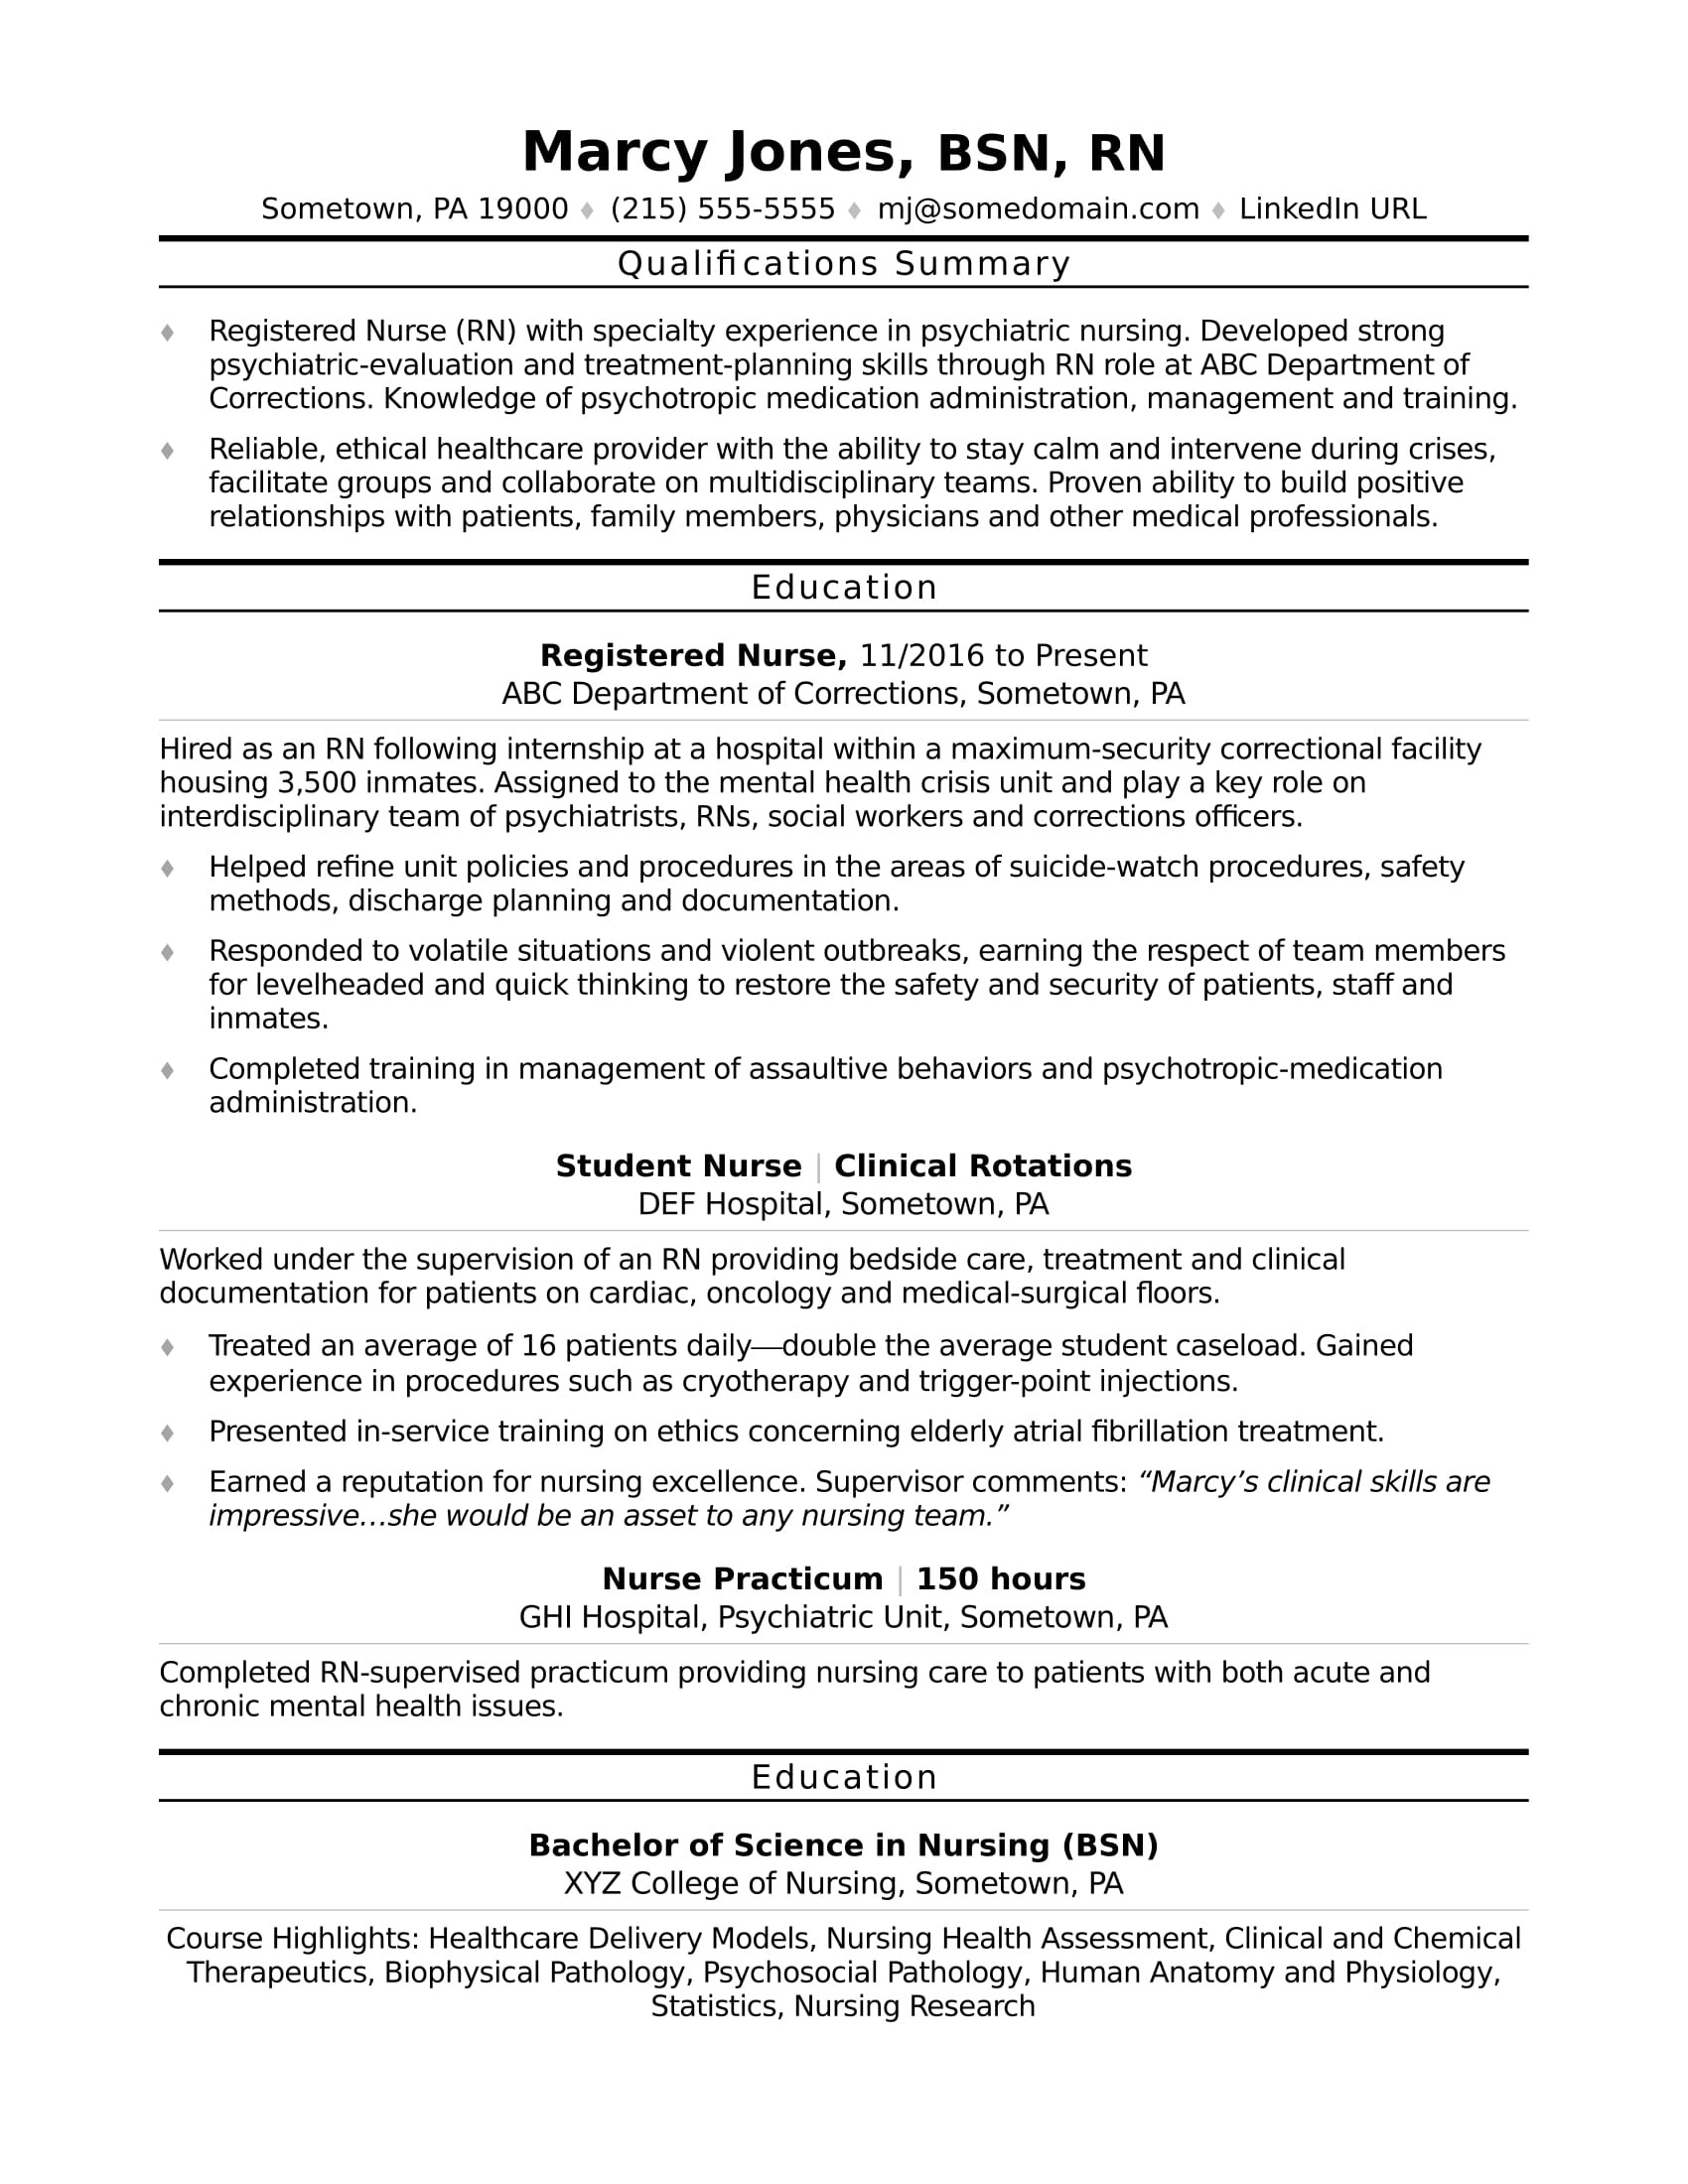 Sample Resume for Undergraduate Nursing Student Entry-level Nurse Resume Monster.com